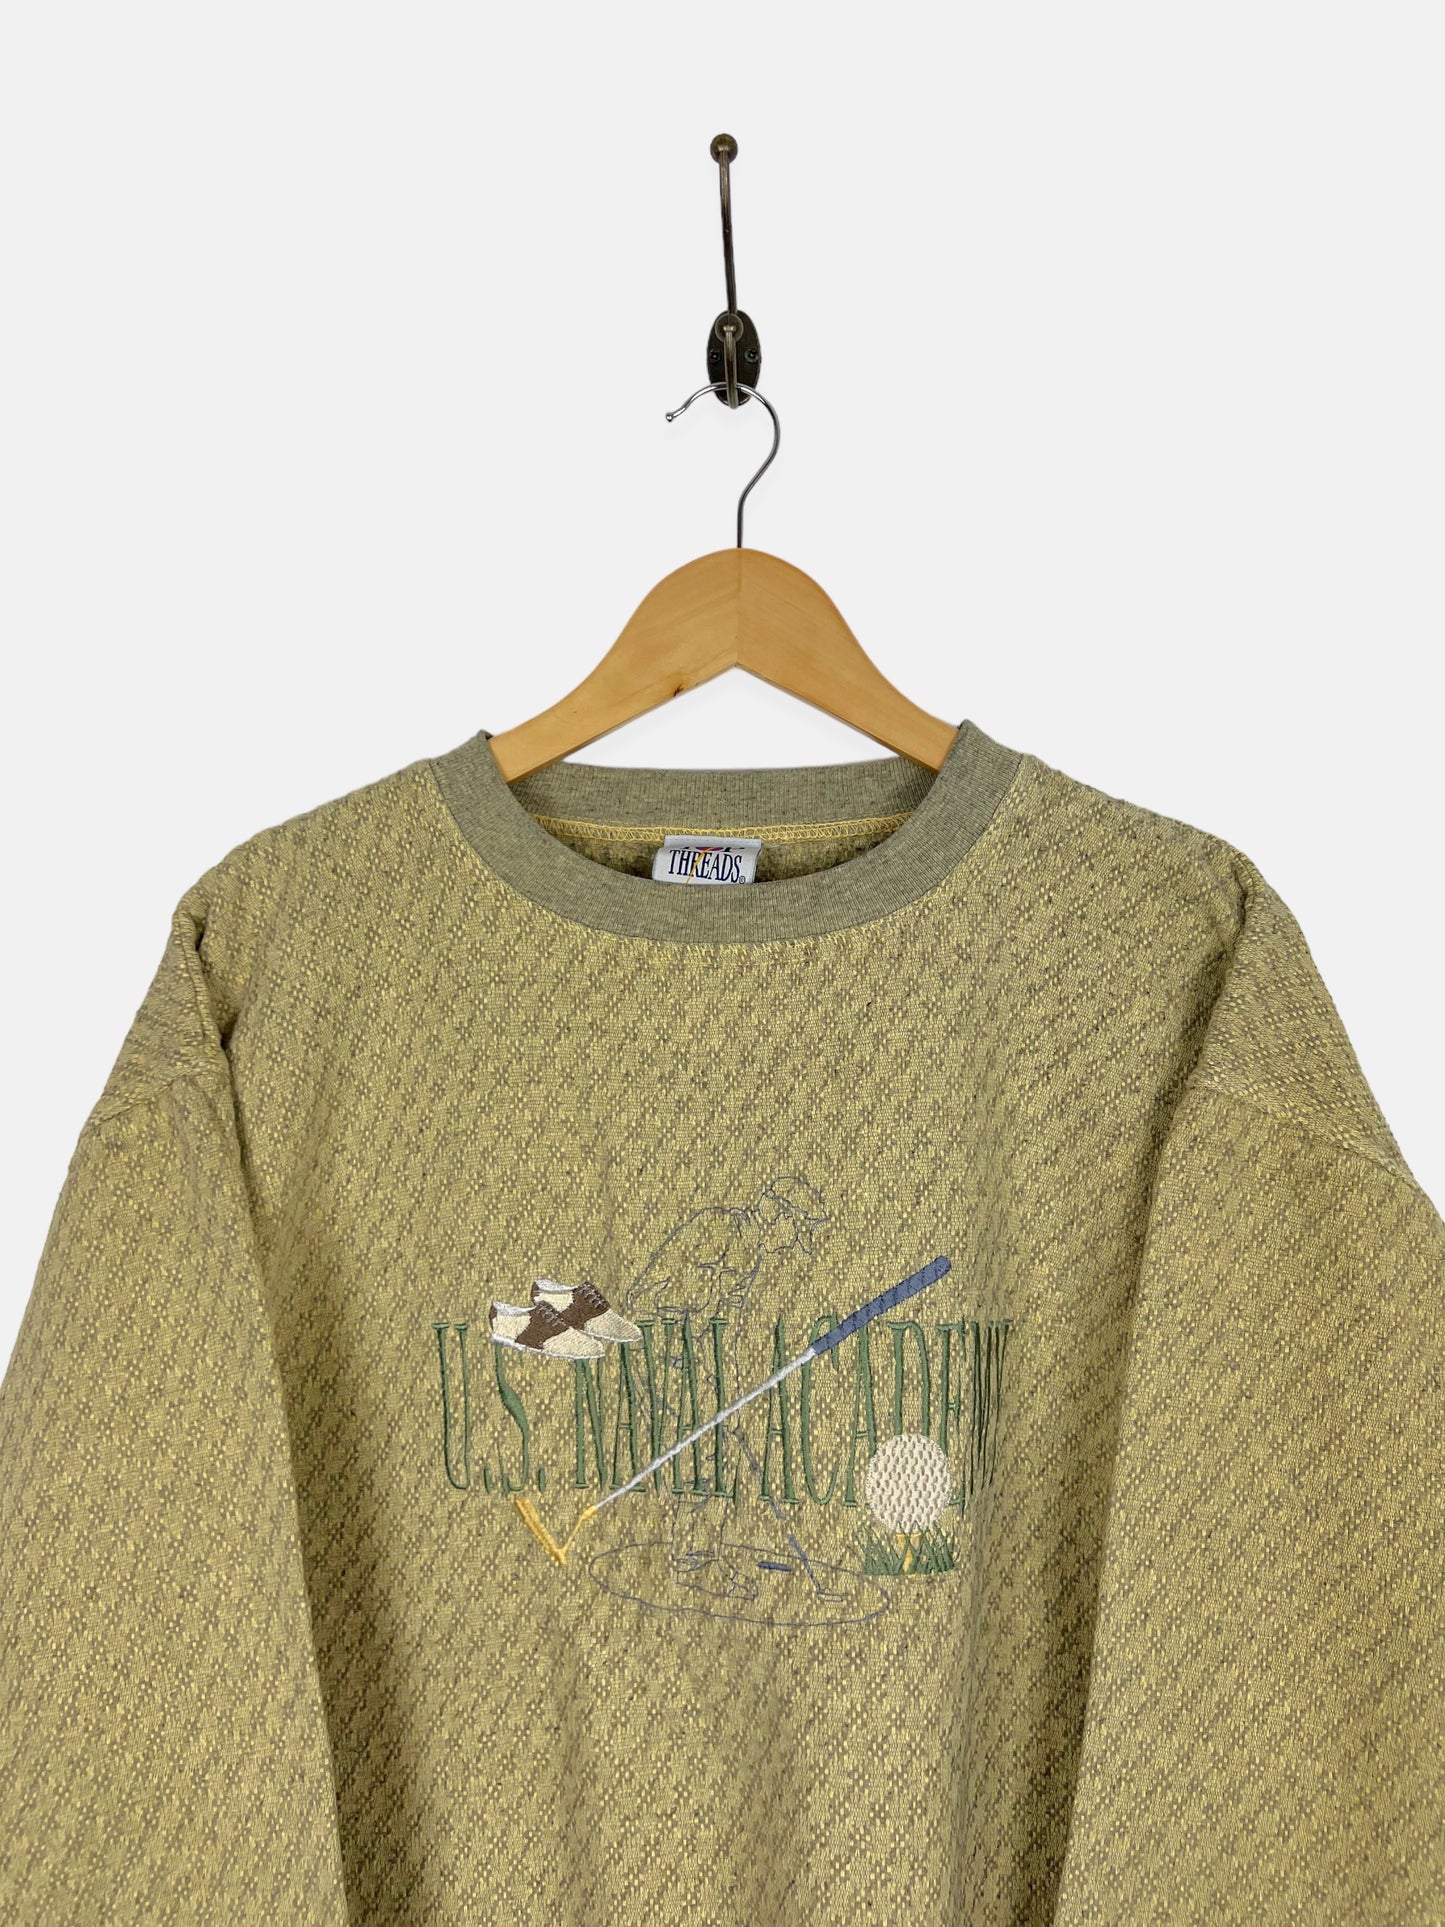 90's U.S Naval Academy Golf USA Made Embroidered Vintage Sweatshirt Size M